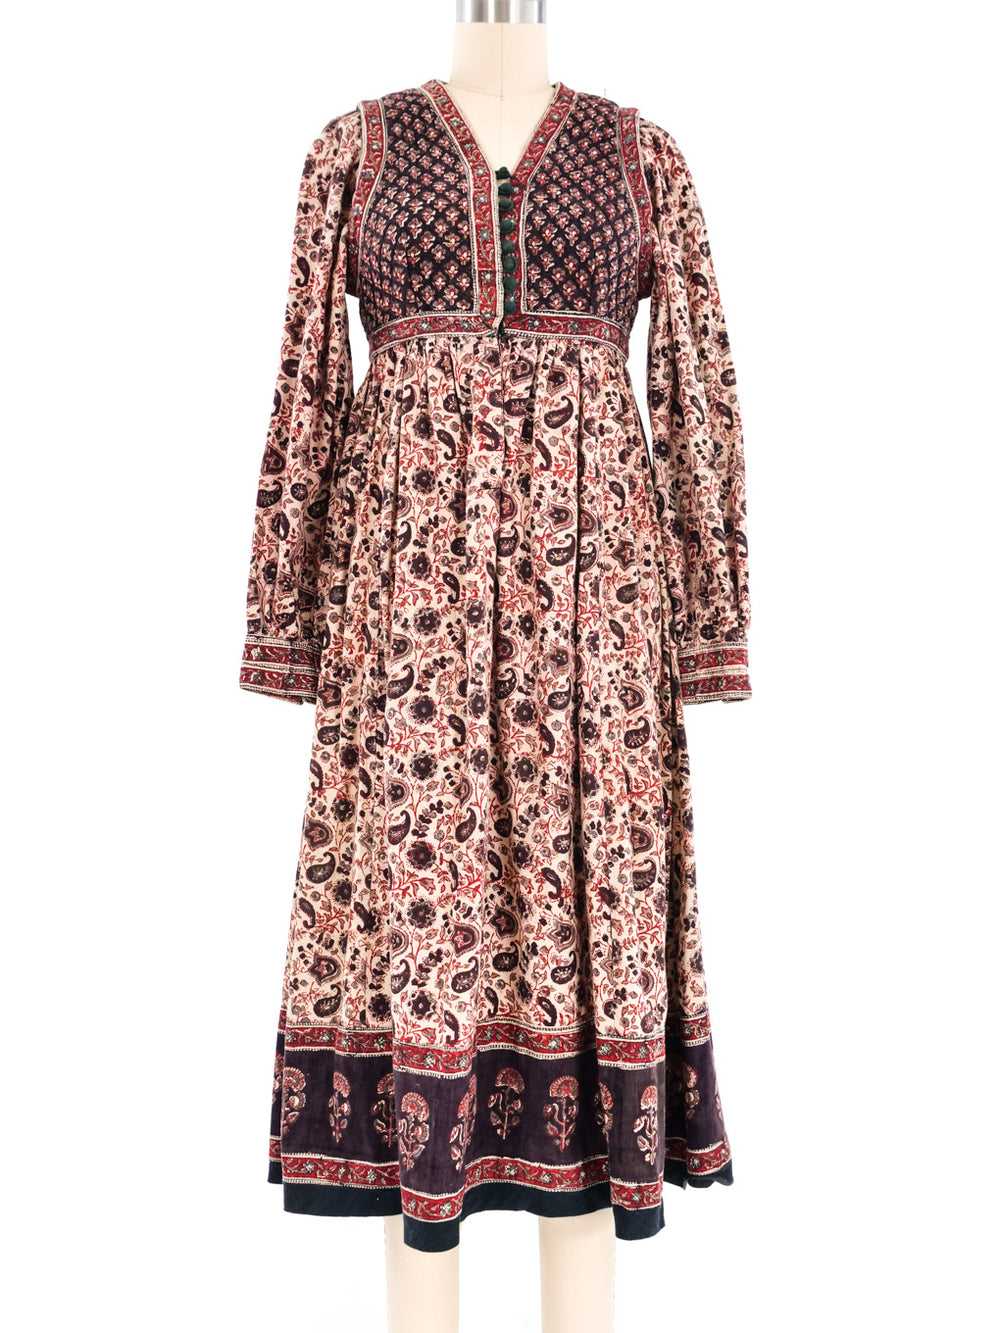 Block Printed Cotton Indian Dress - image 1